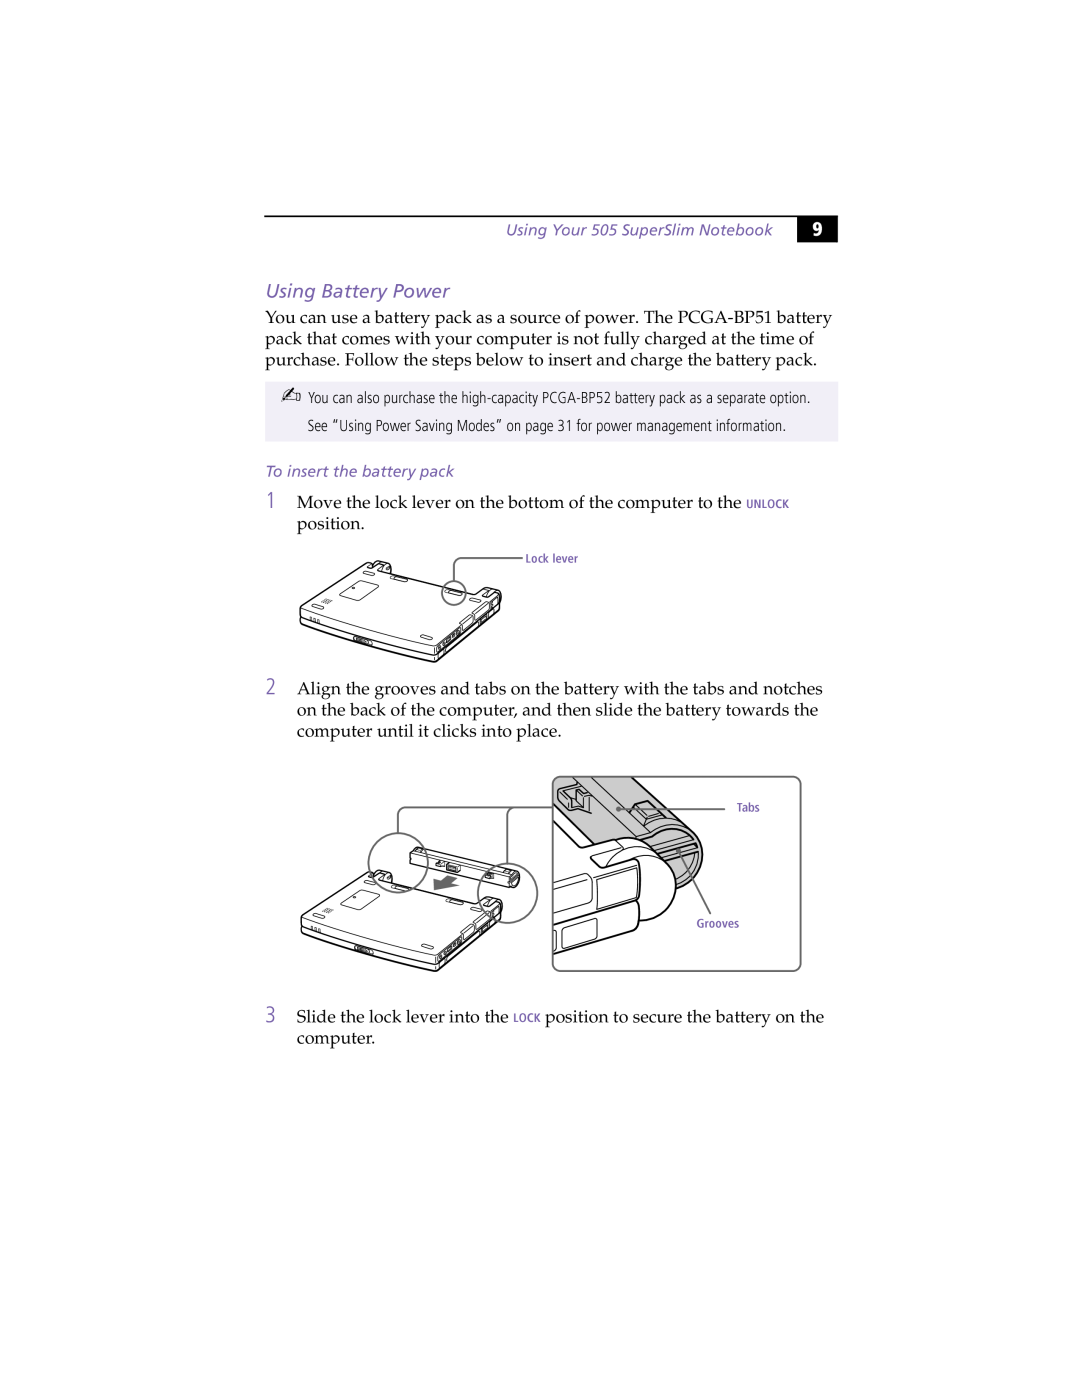 Sony PCG505FX manual UsingBatteryPower, UsingYour505SuperSlimNotebook 